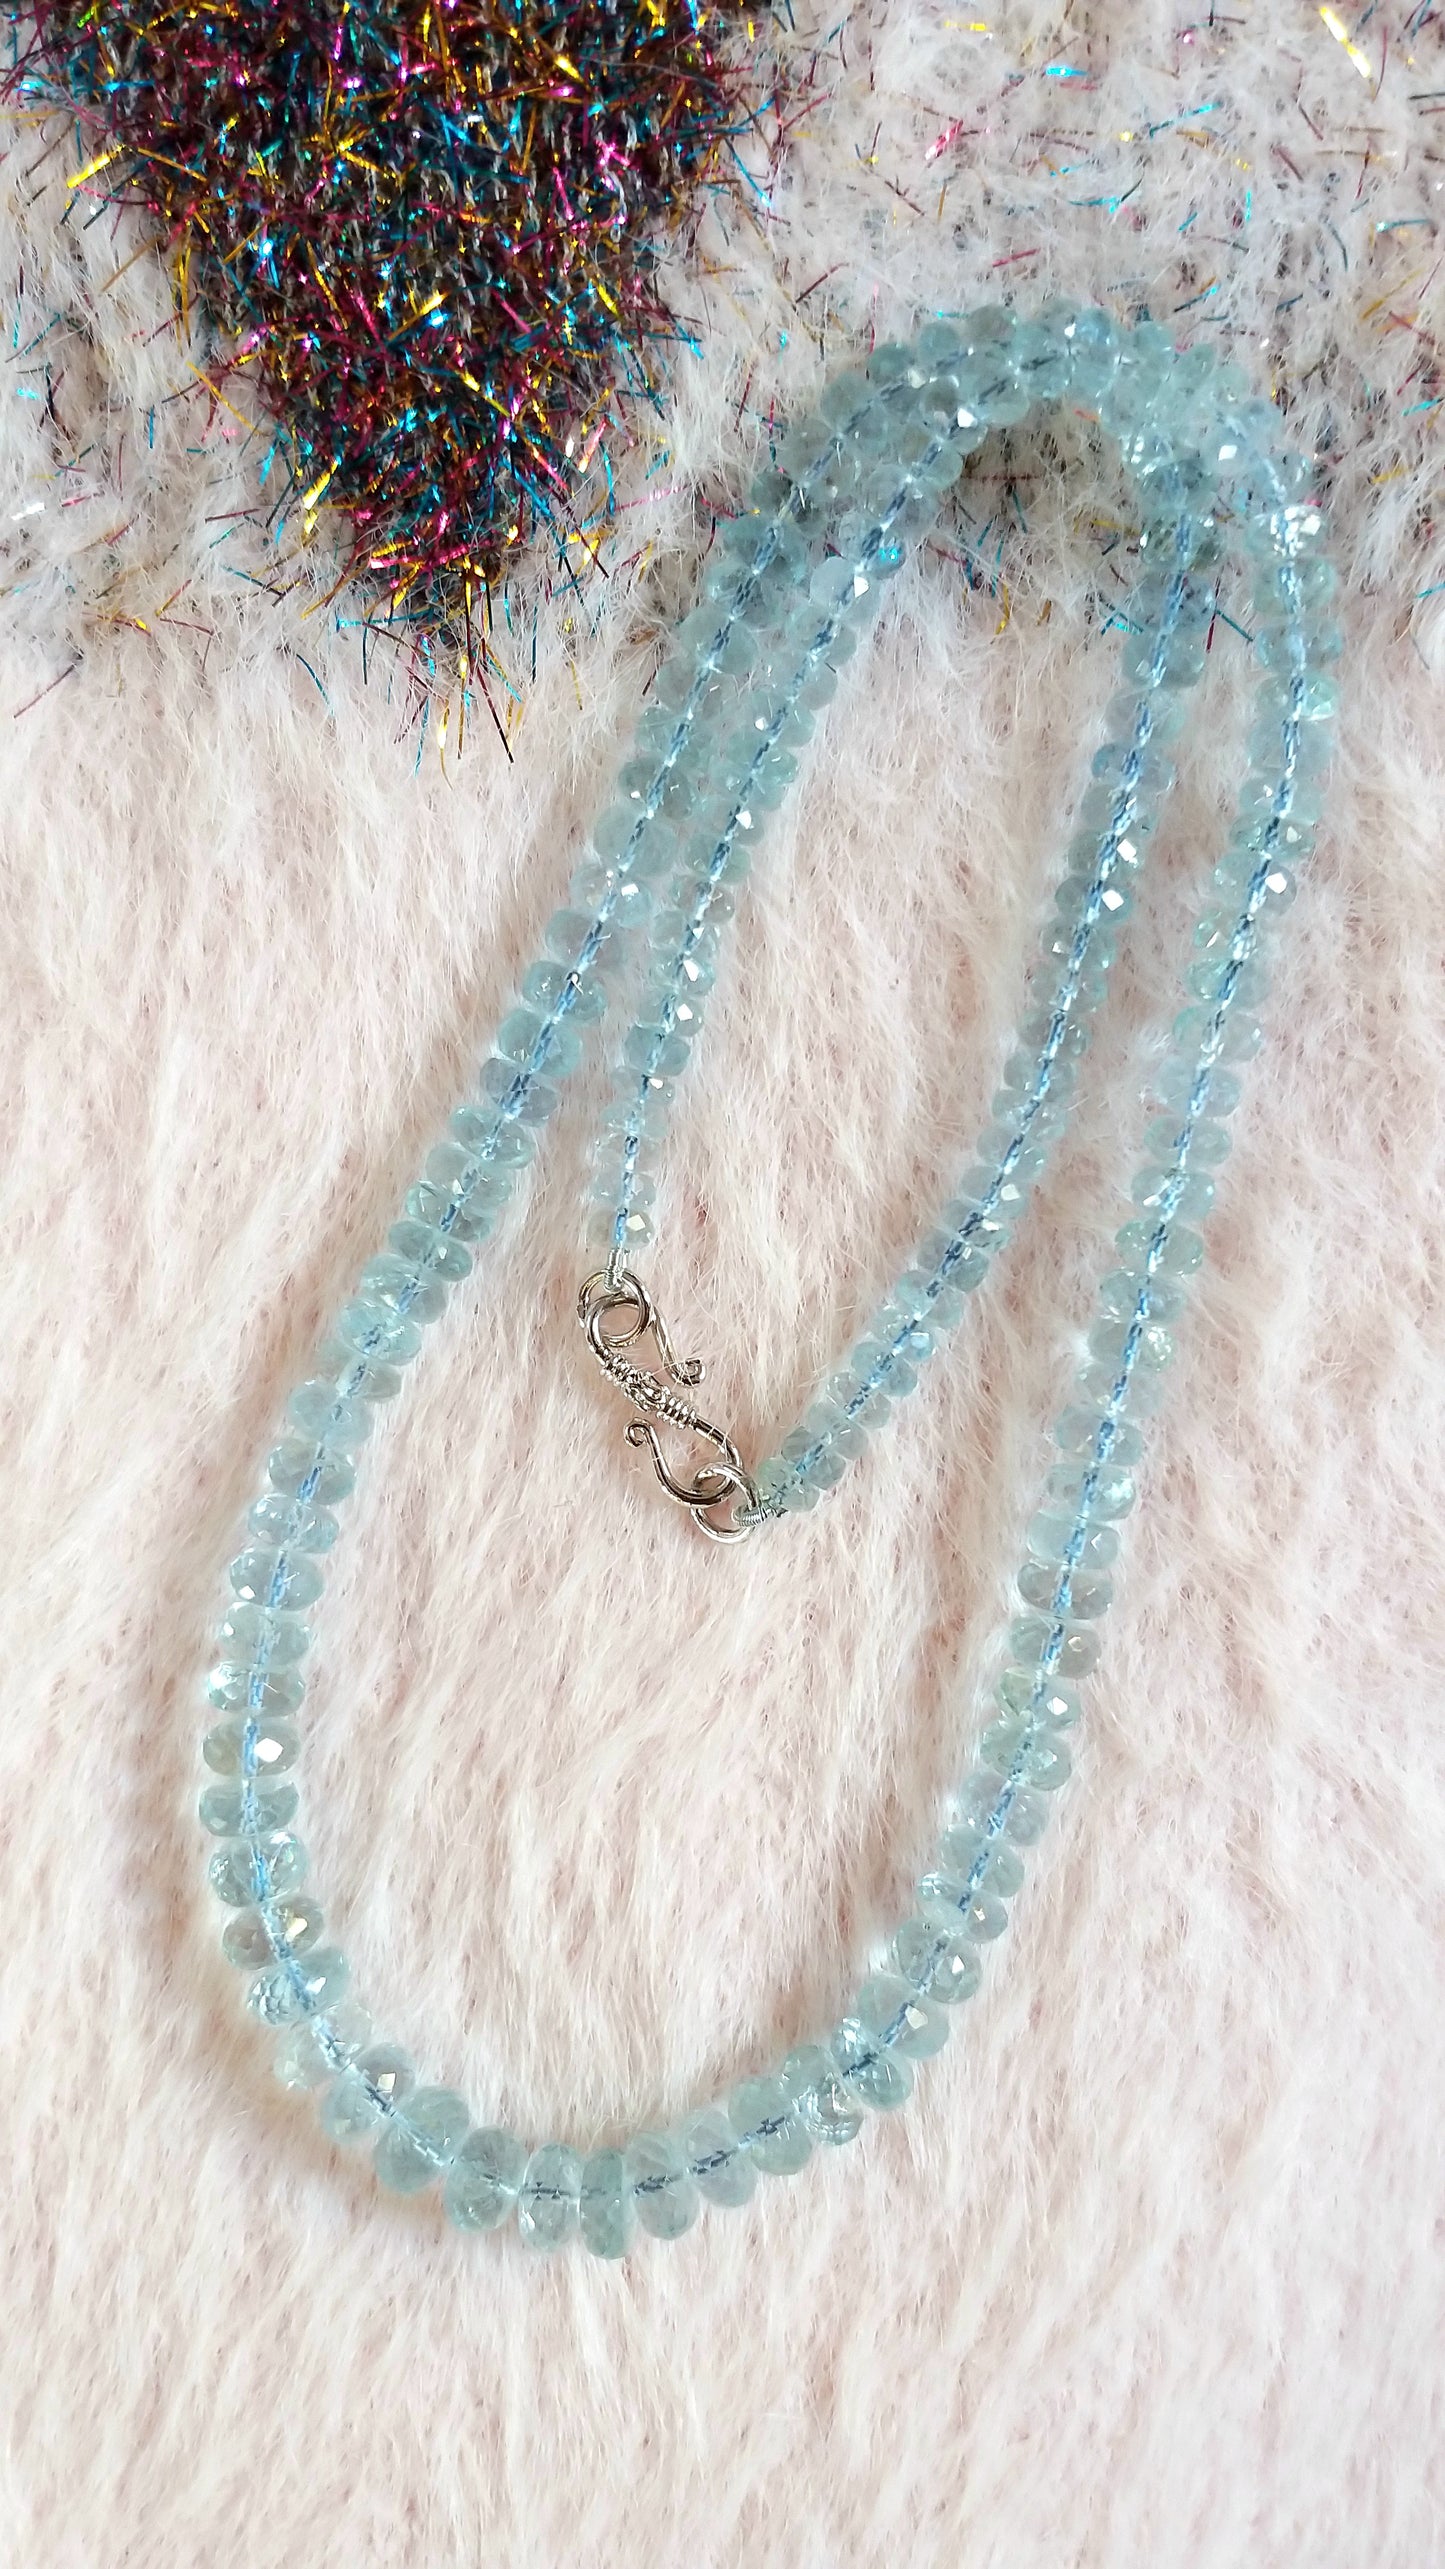 Natural Aquamarine Faceted Beads Necklace, Single Strand Aquamarine Necklace